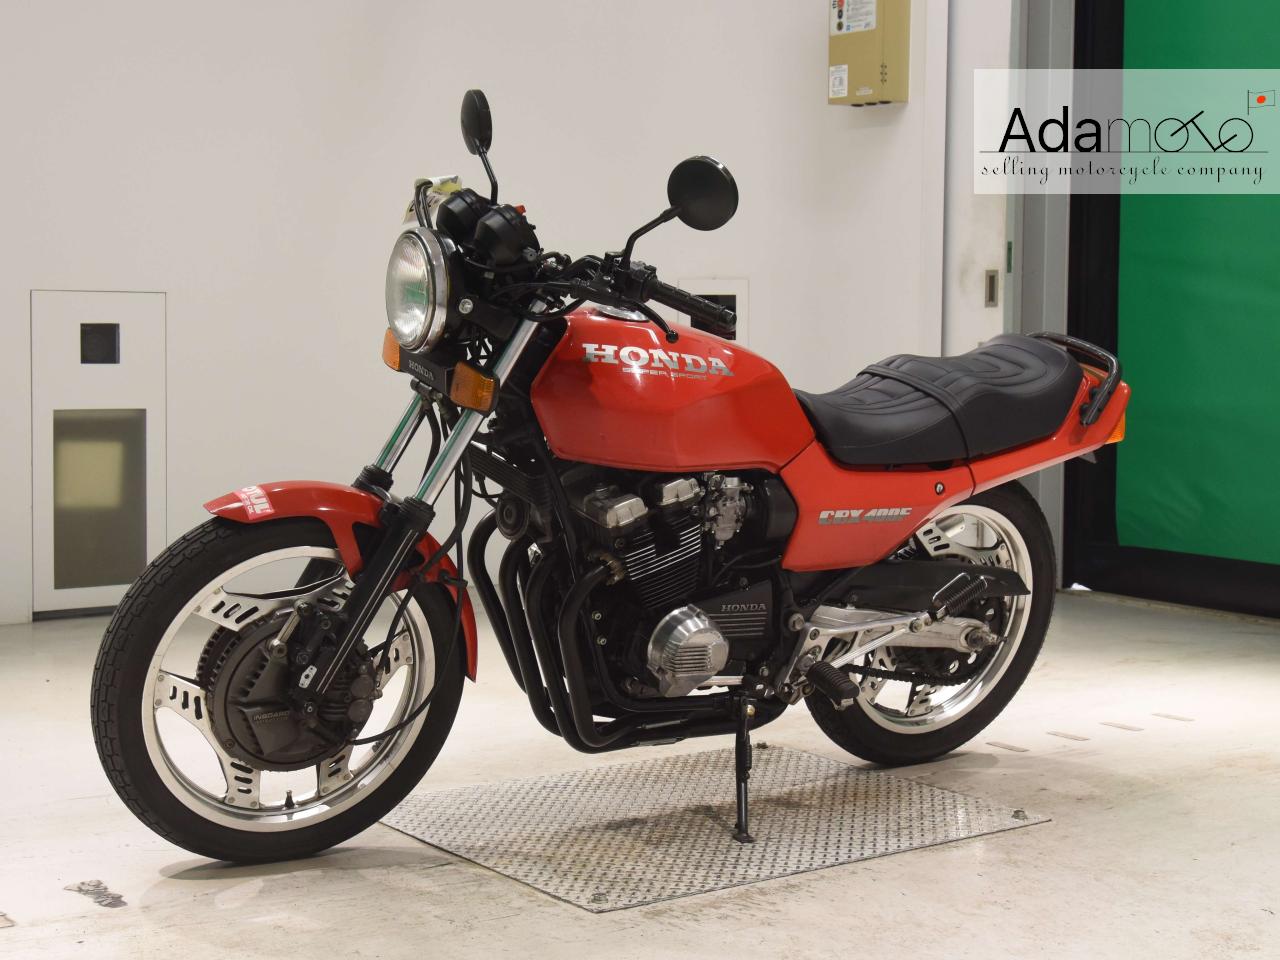 Honda CBX550F - Adamoto - Motorcycles from Japan